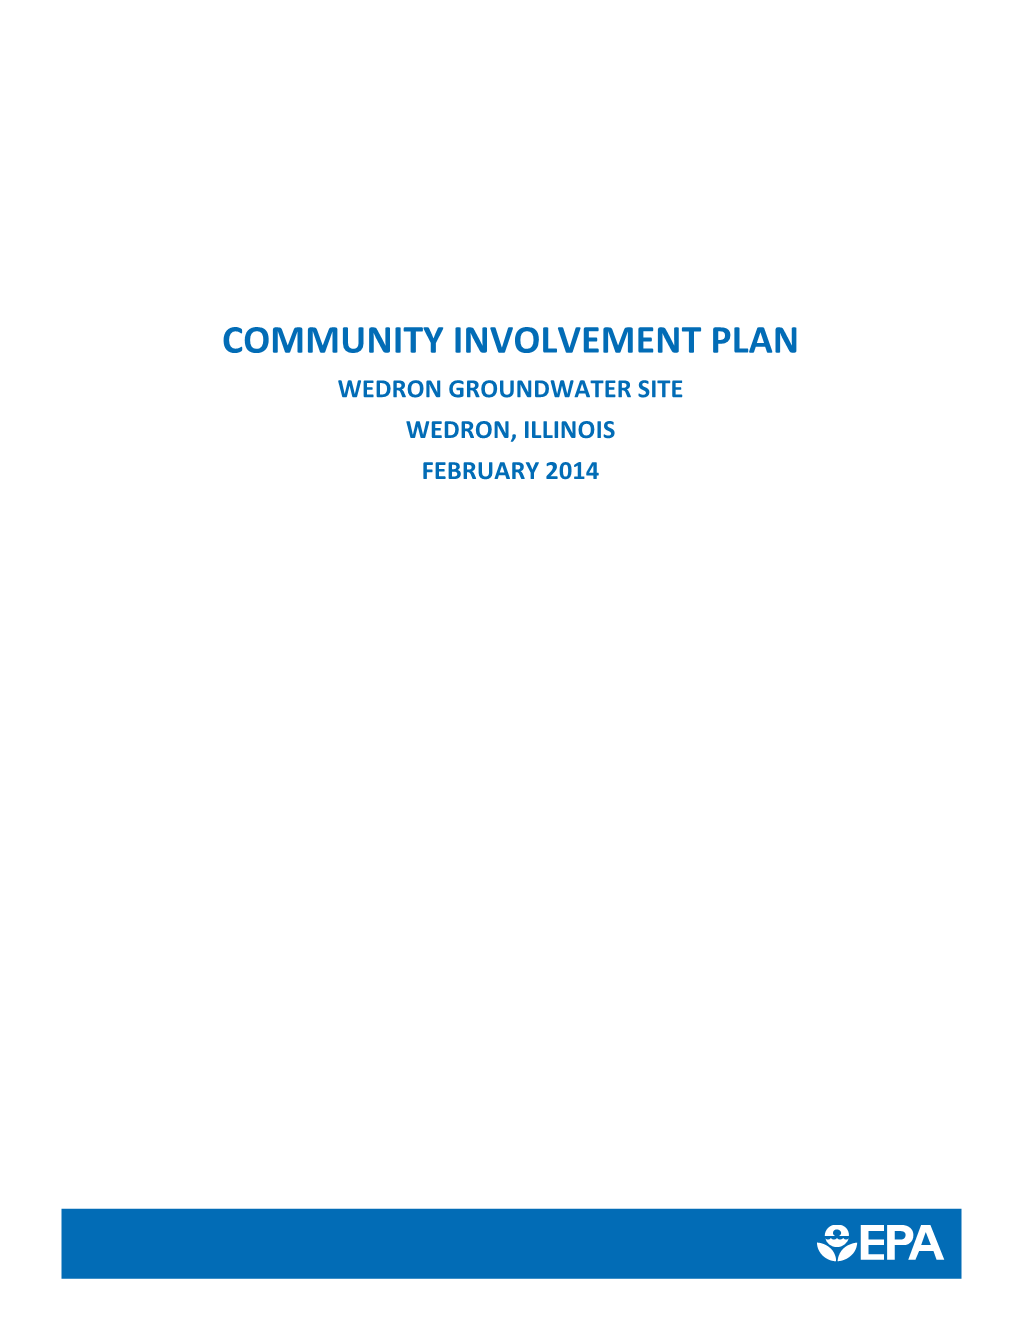 Community Involvement Plan Wedron Groundwater Site Wedron, Illinois February 2014